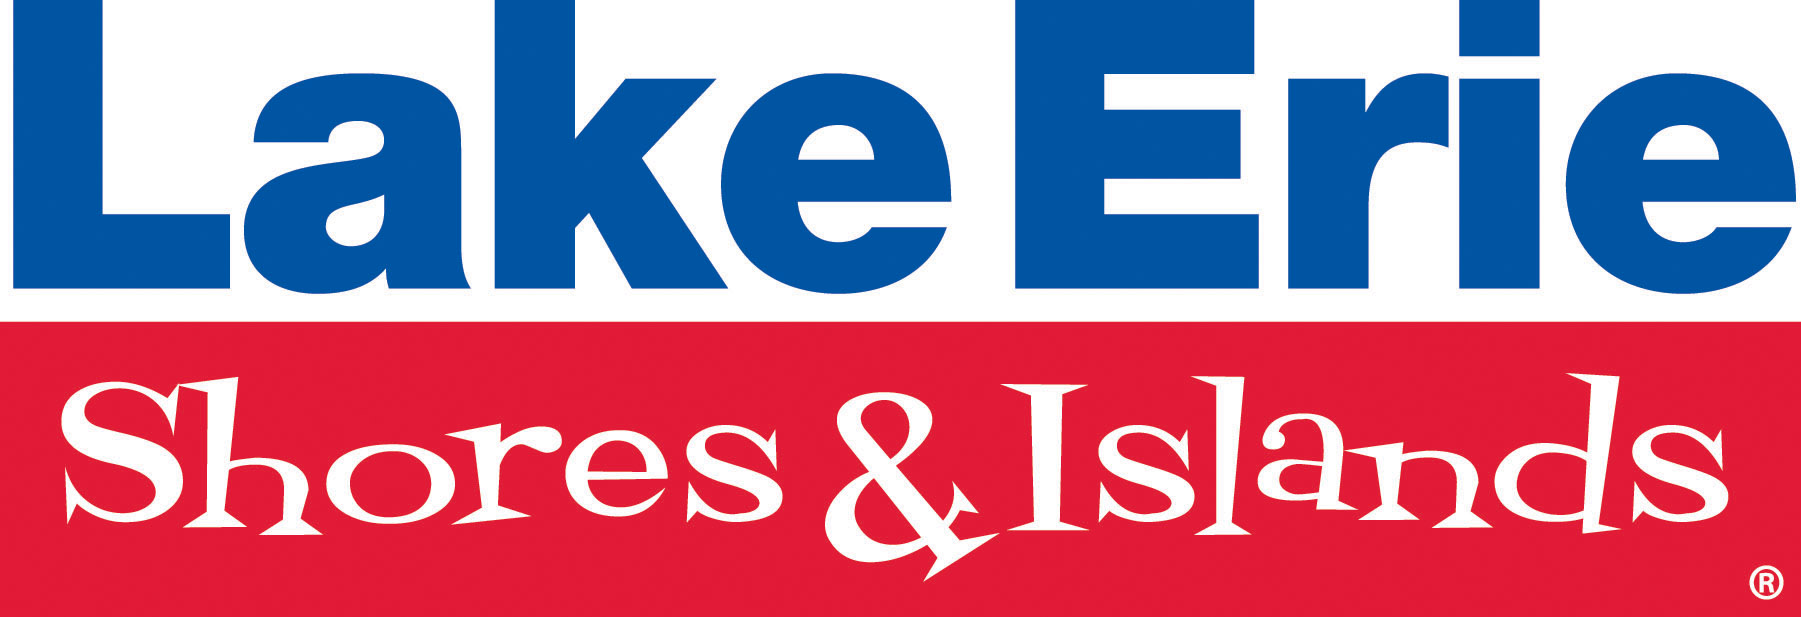 Lake Erie Shores and Islands logo